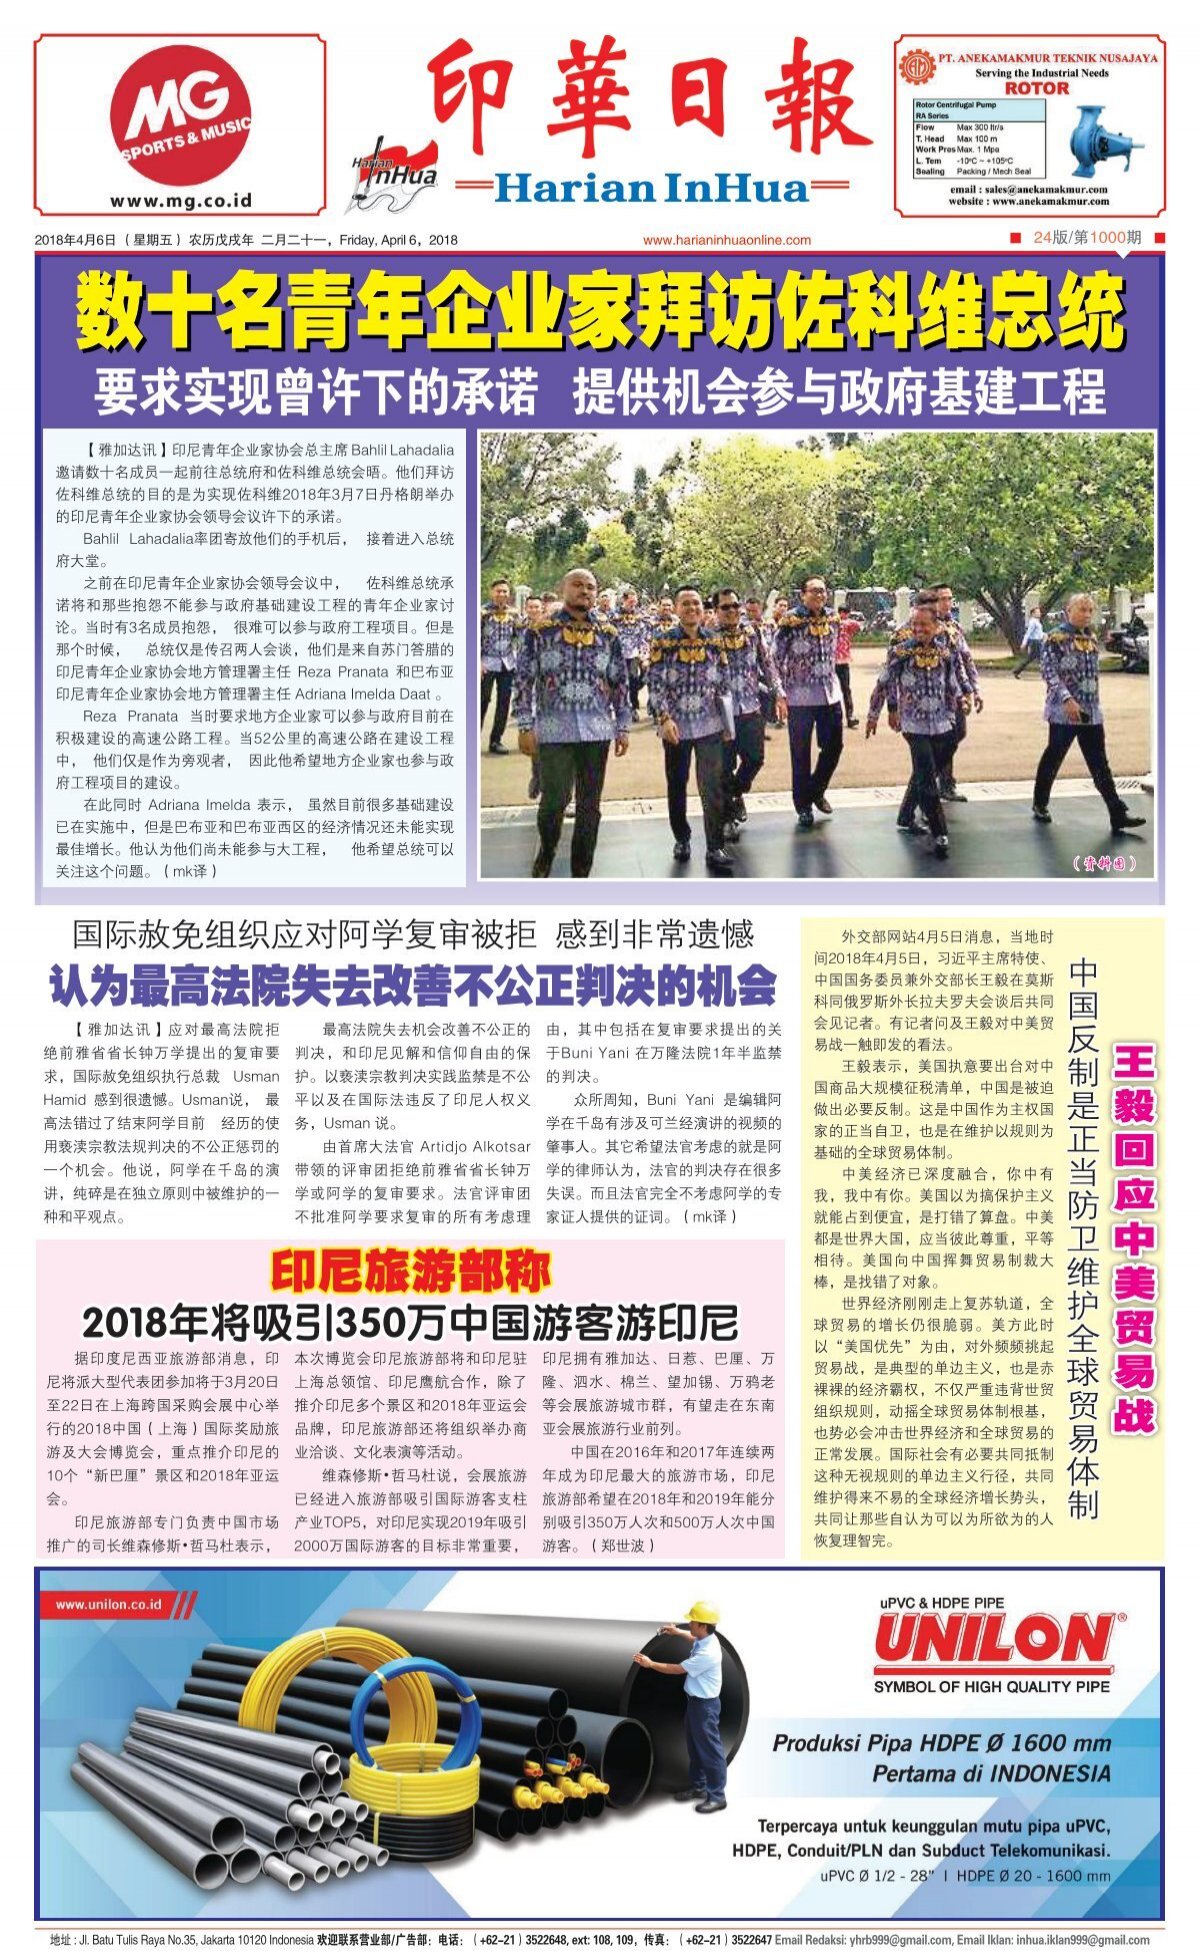 Koran Harian Inhua 6 April 18